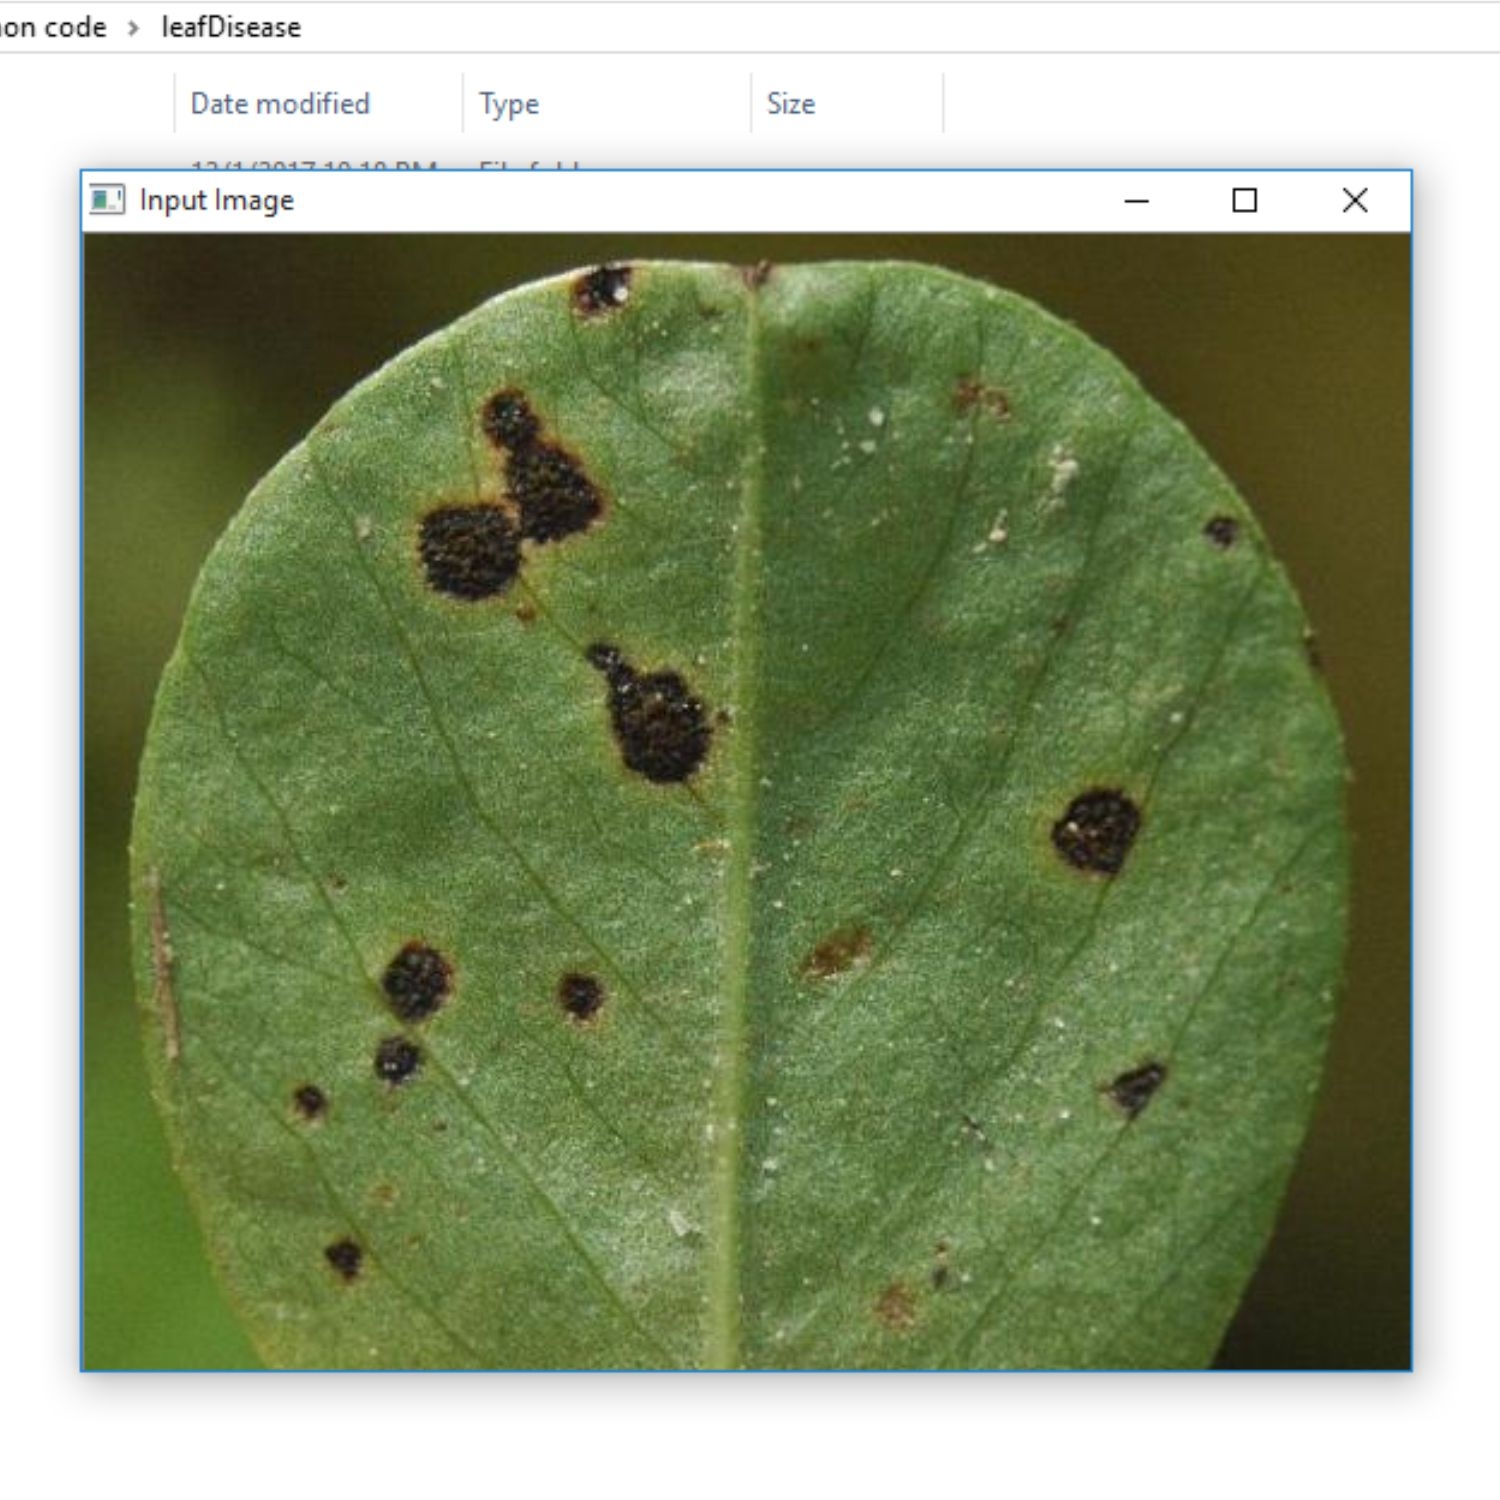 Leaf Disease Classification using OpenCV, Python